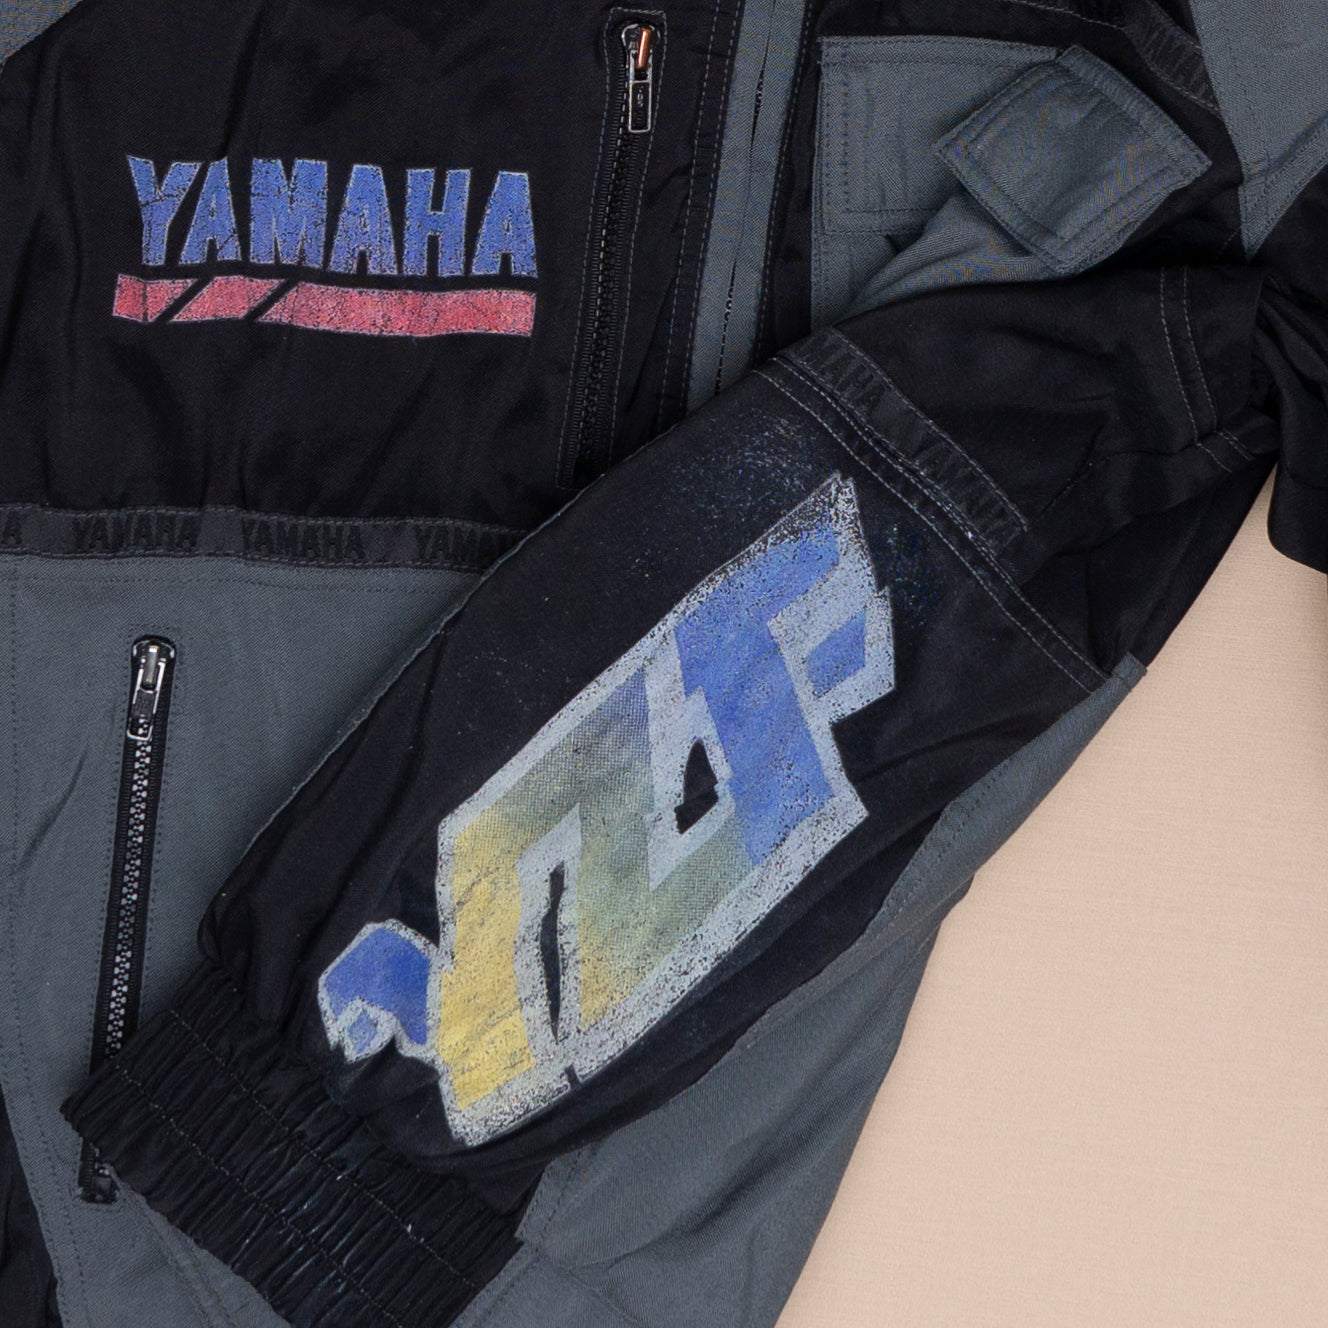 Yamaha YZF Jacke, L